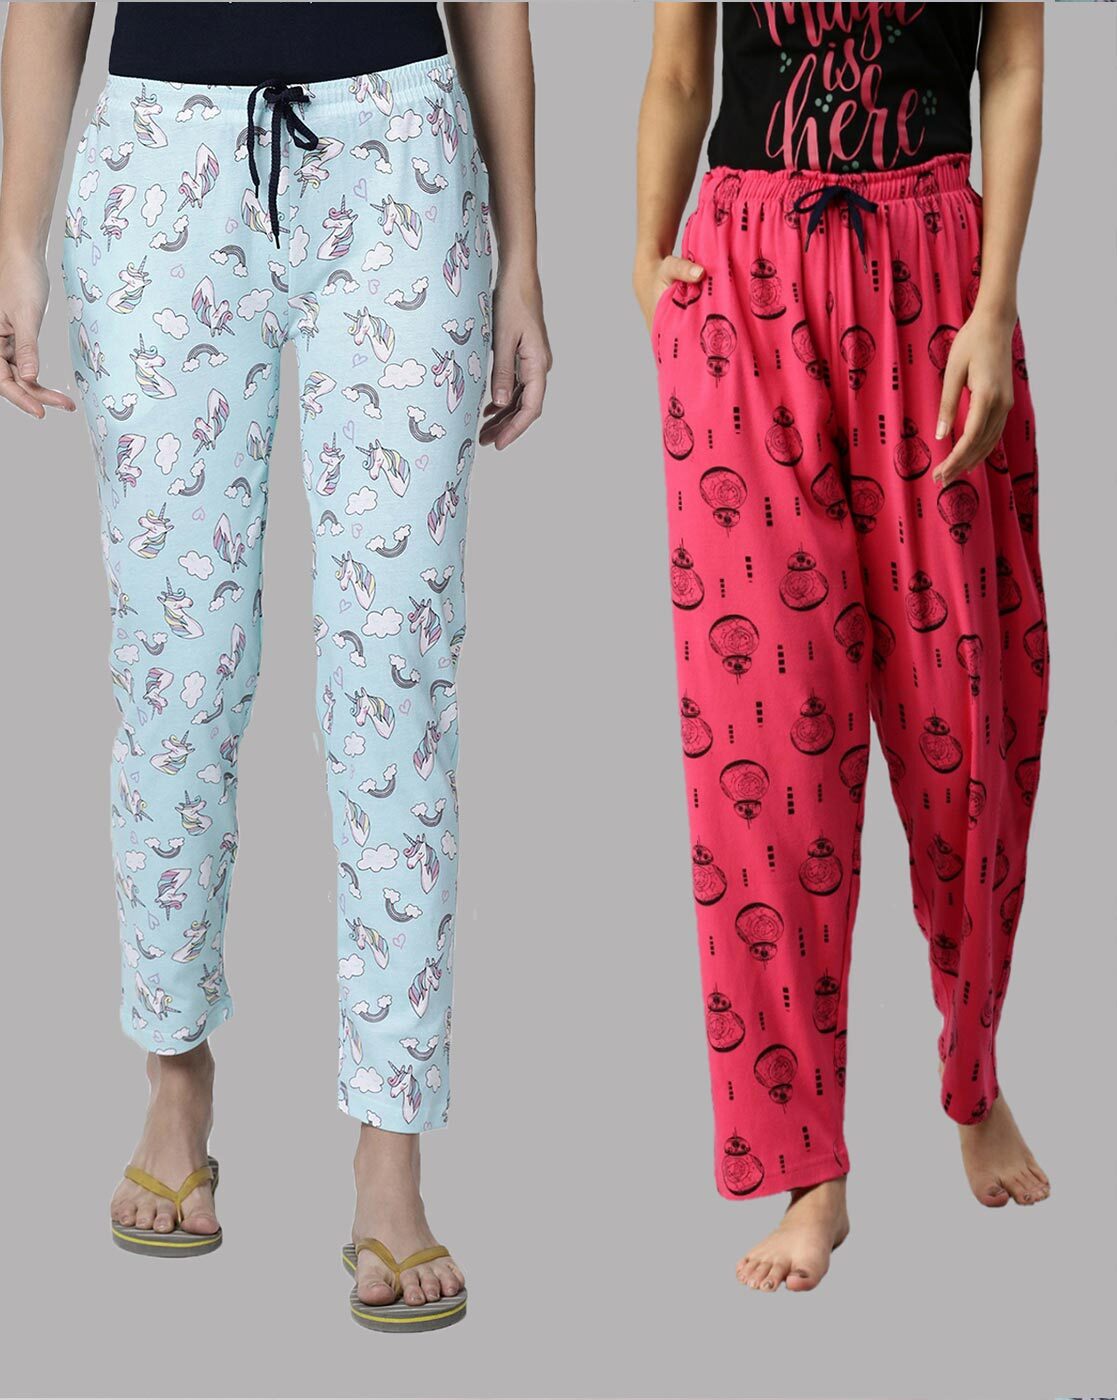 Printed Pajama Pants - FIORE - IMP FOND ROSE - ETAM